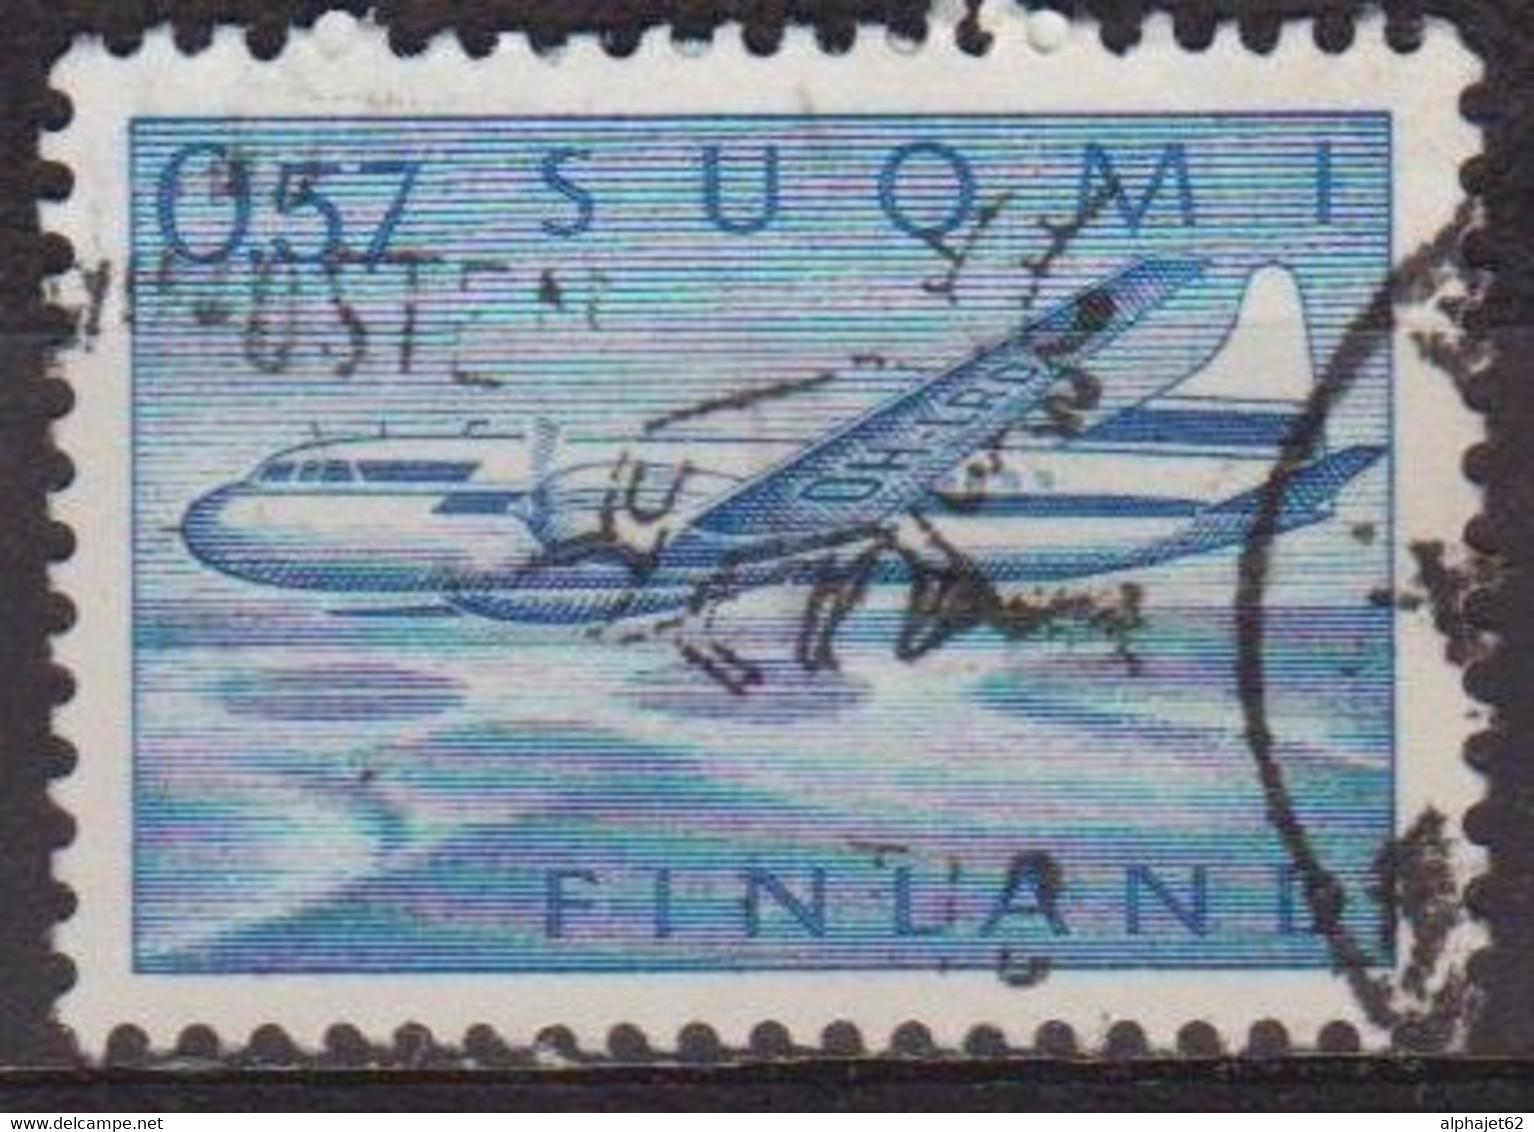 Convair 440, Bimoteur - FINLANDE - Avion De Ligne - Aviation - N° 12 - 1970 - Gebraucht